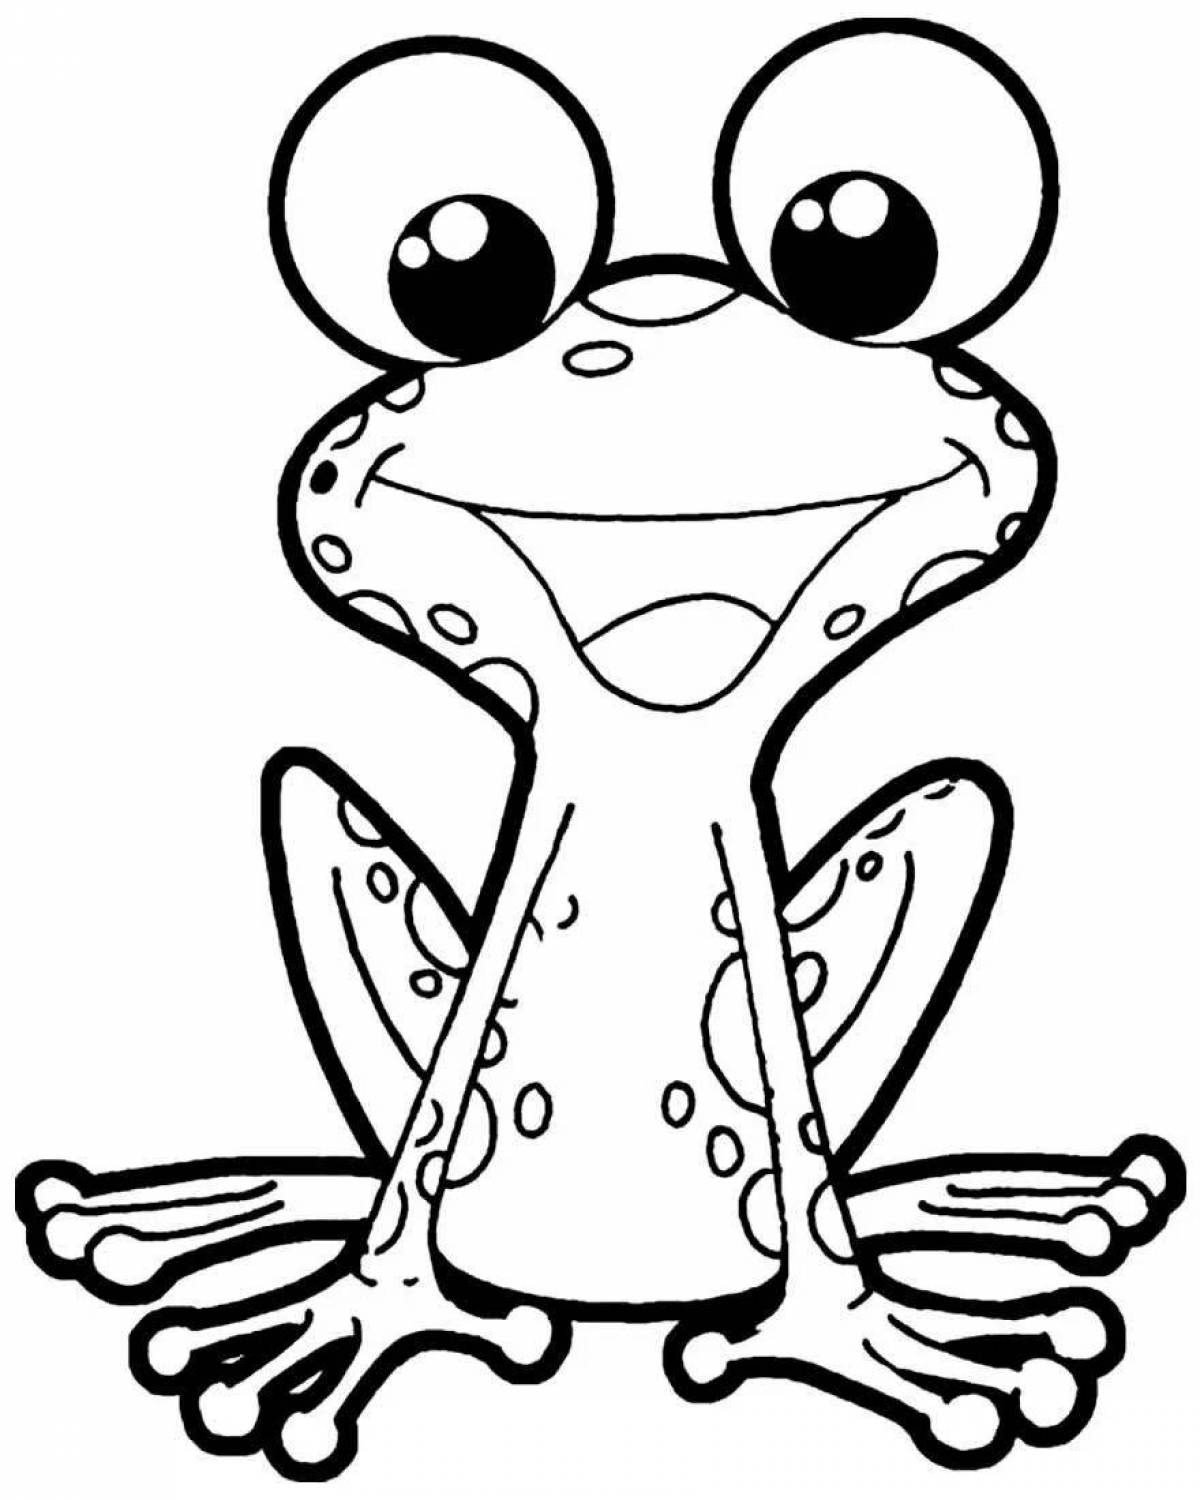 Delightful teremok frog coloring book